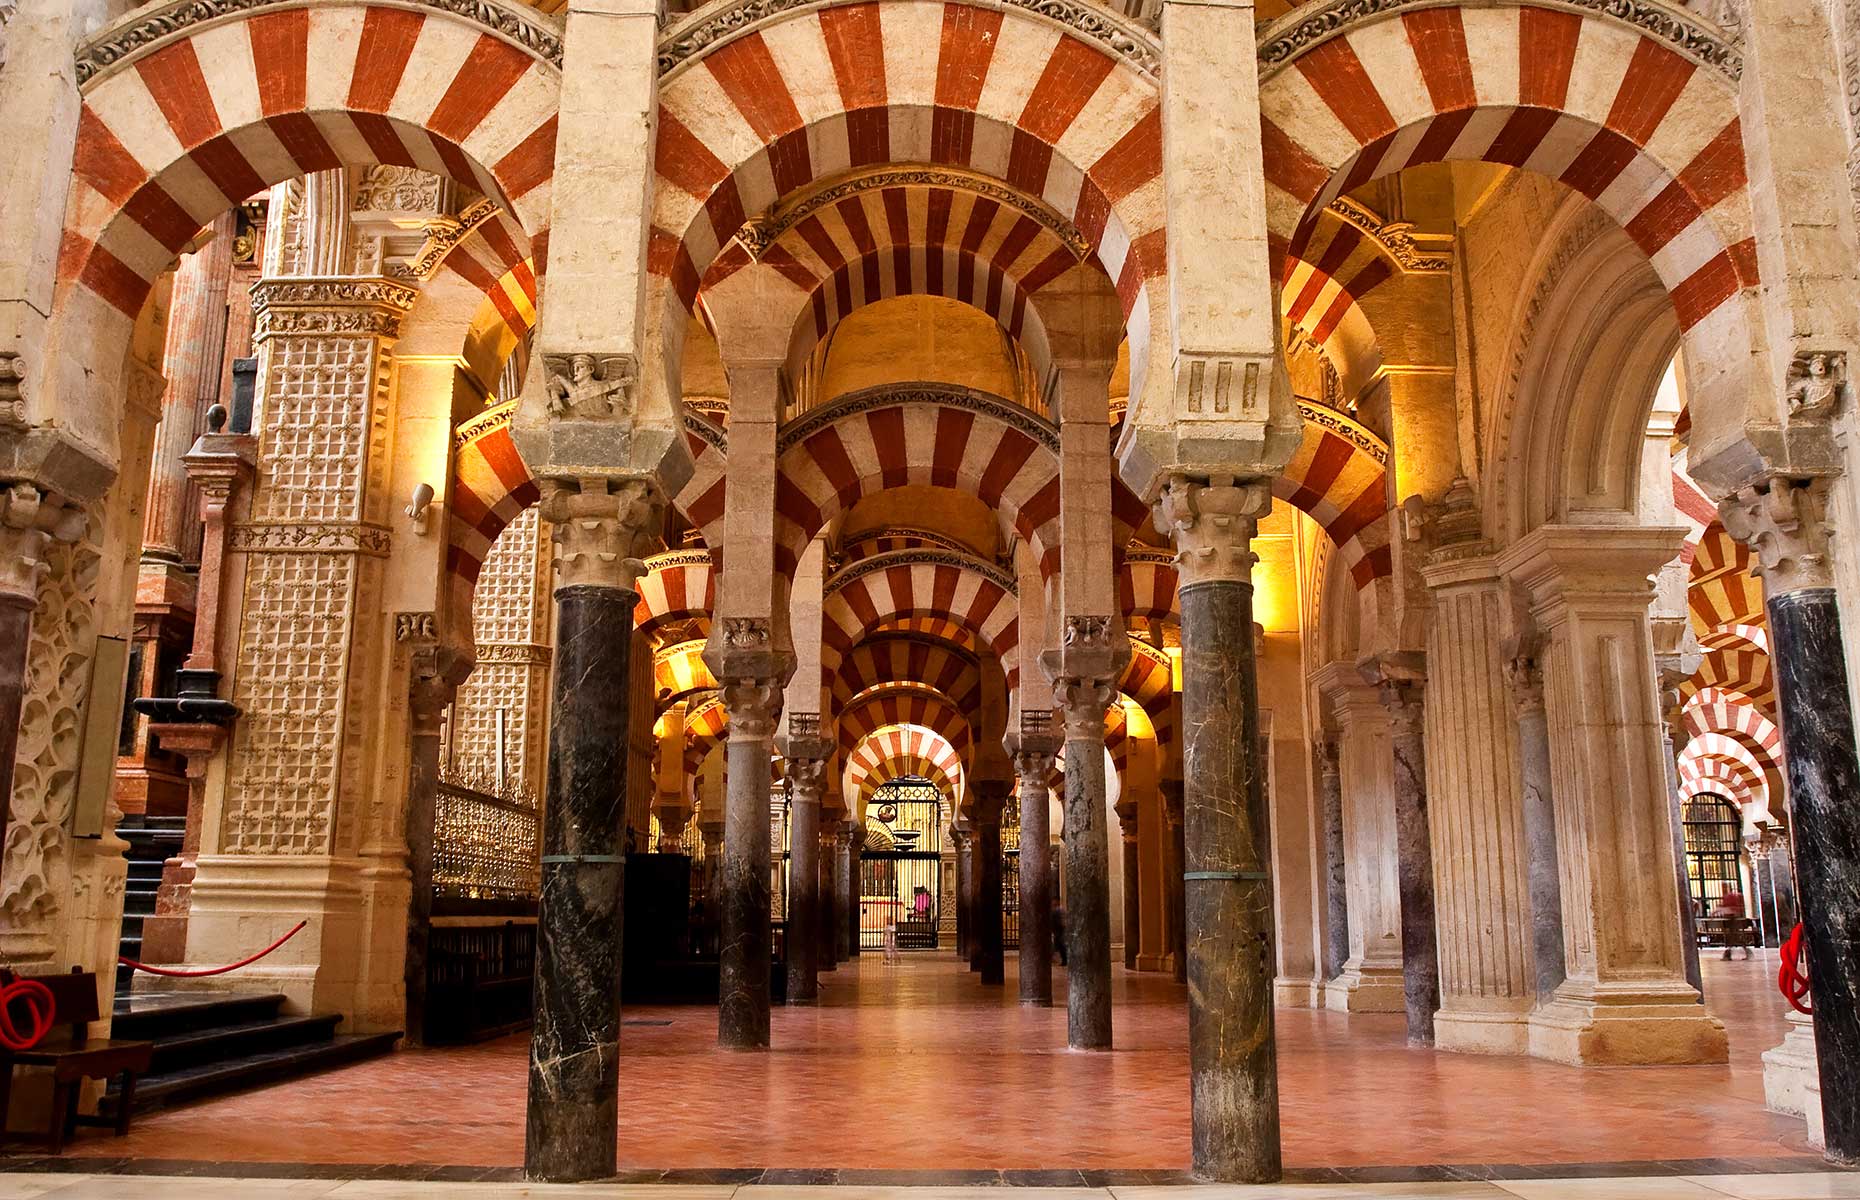 Mezquita de Córdoba (Image: Patrick Wang/Shutterstock)